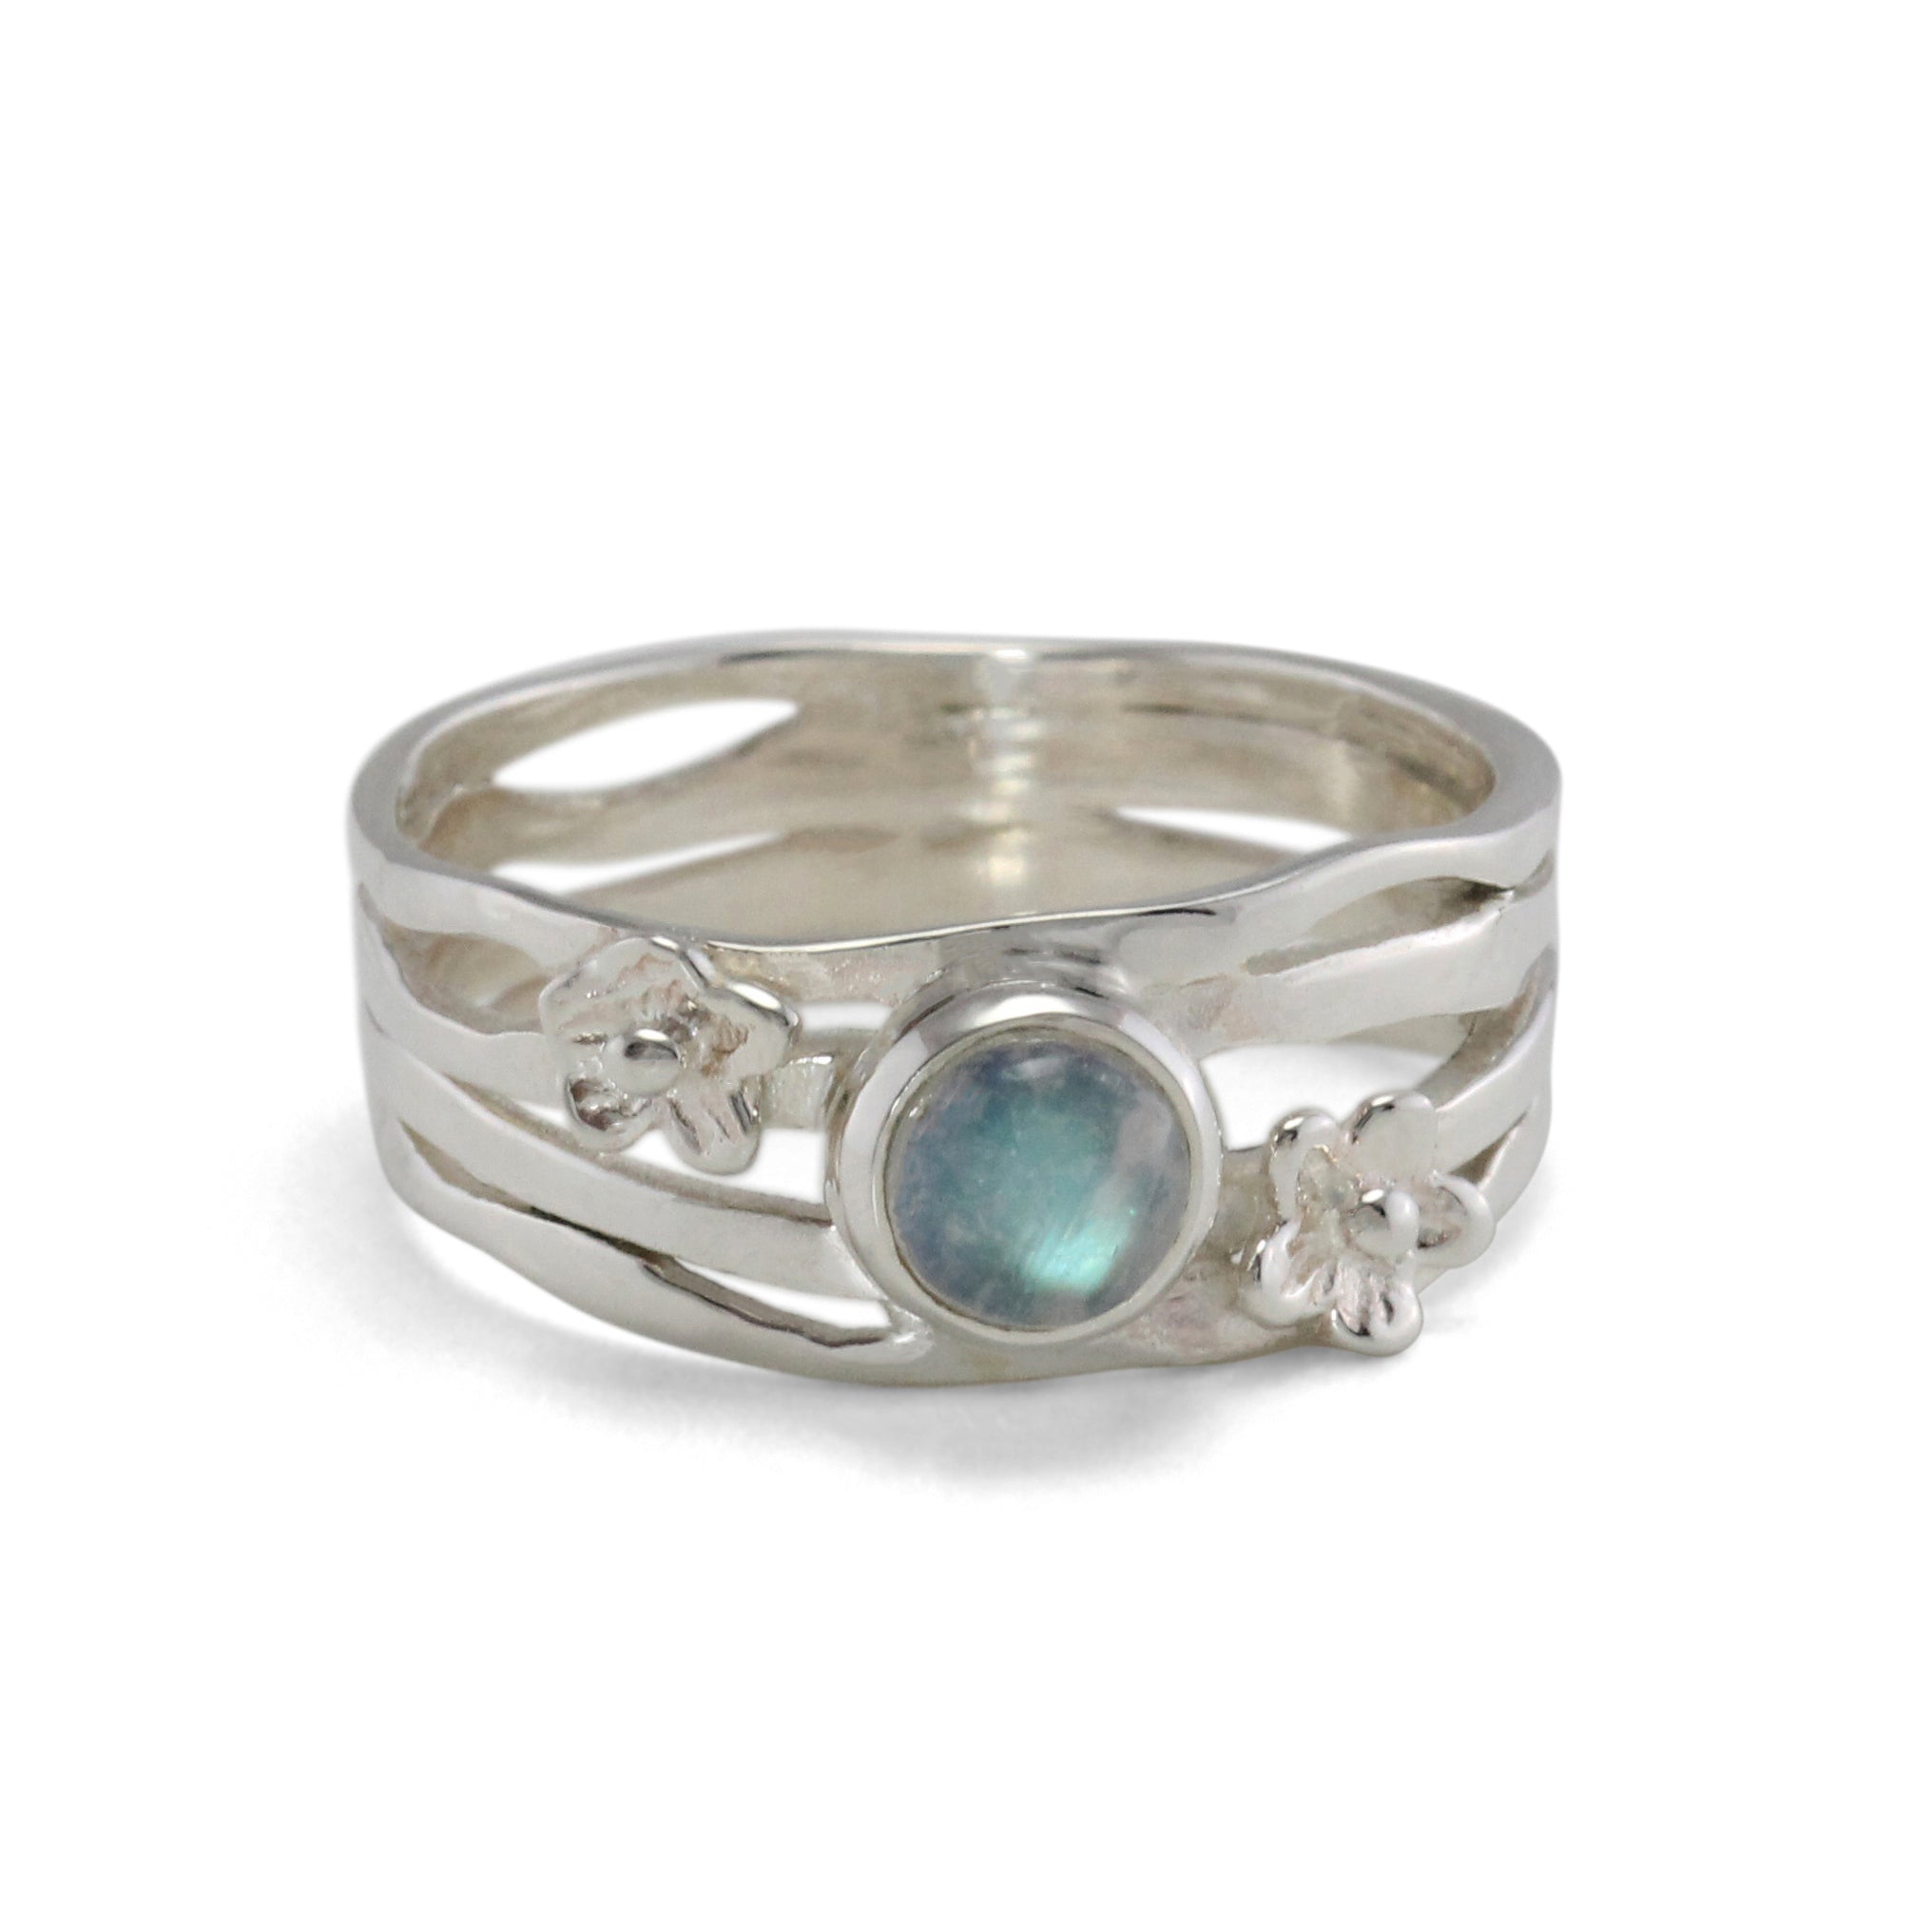 Moonstone Flower Ring - The Nancy Smillie Shop - Art, Jewellery & Designer Gifts Glasgow